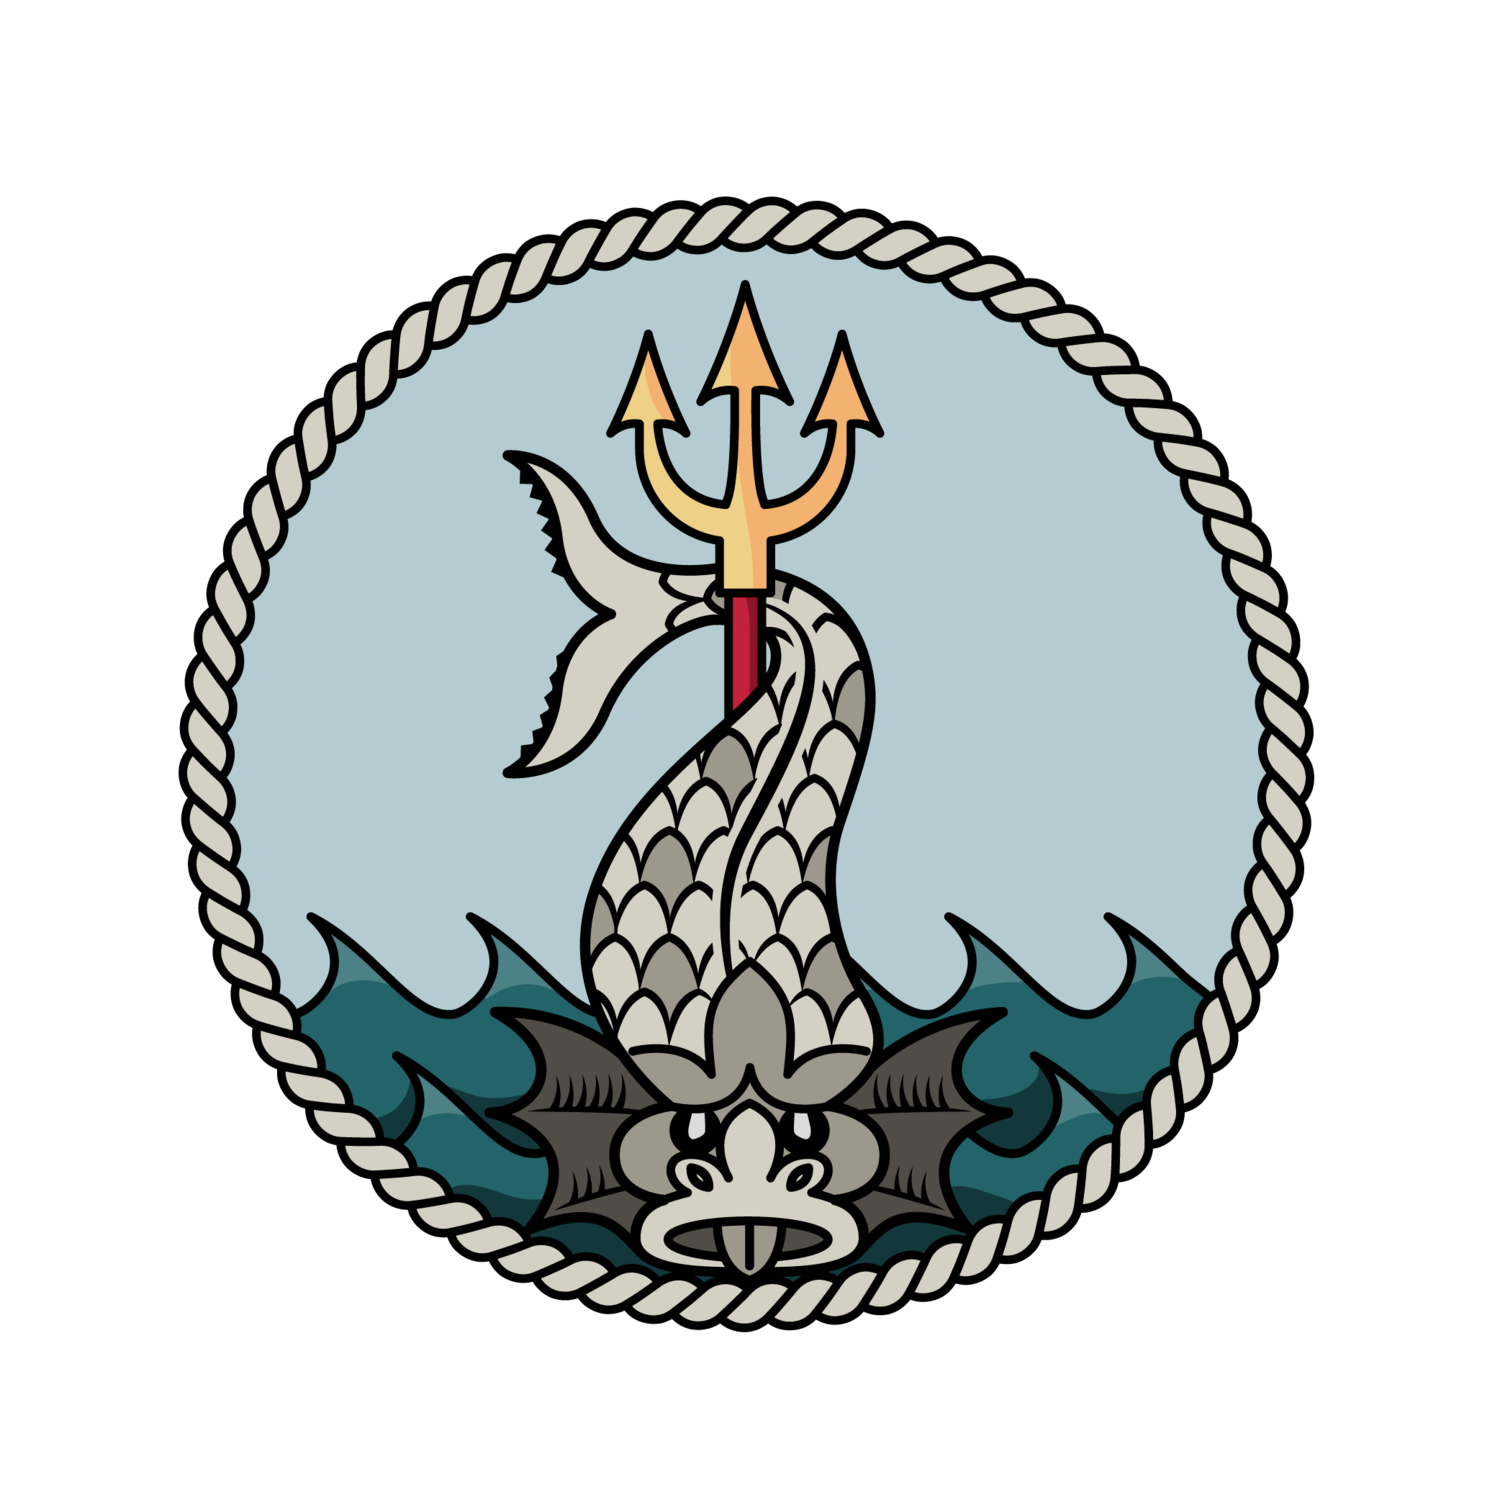 The Gosling Foundation